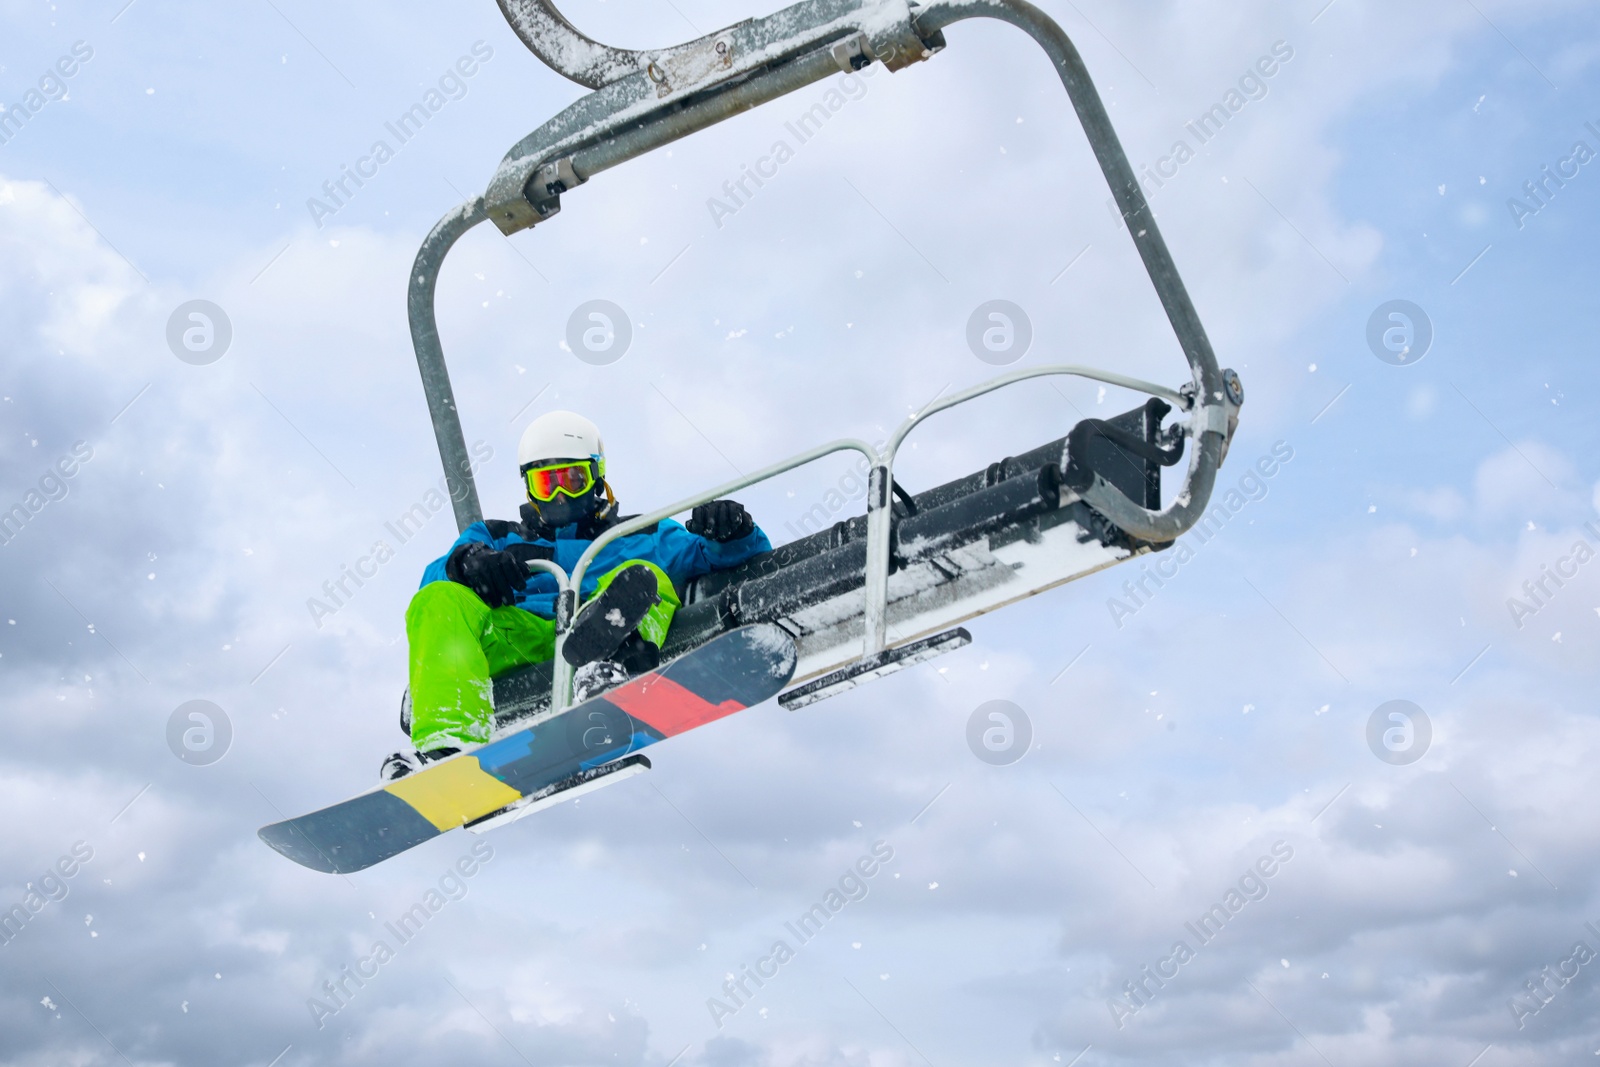 Photo of Snowboarder using ski lift at mountain resort. Winter vacation